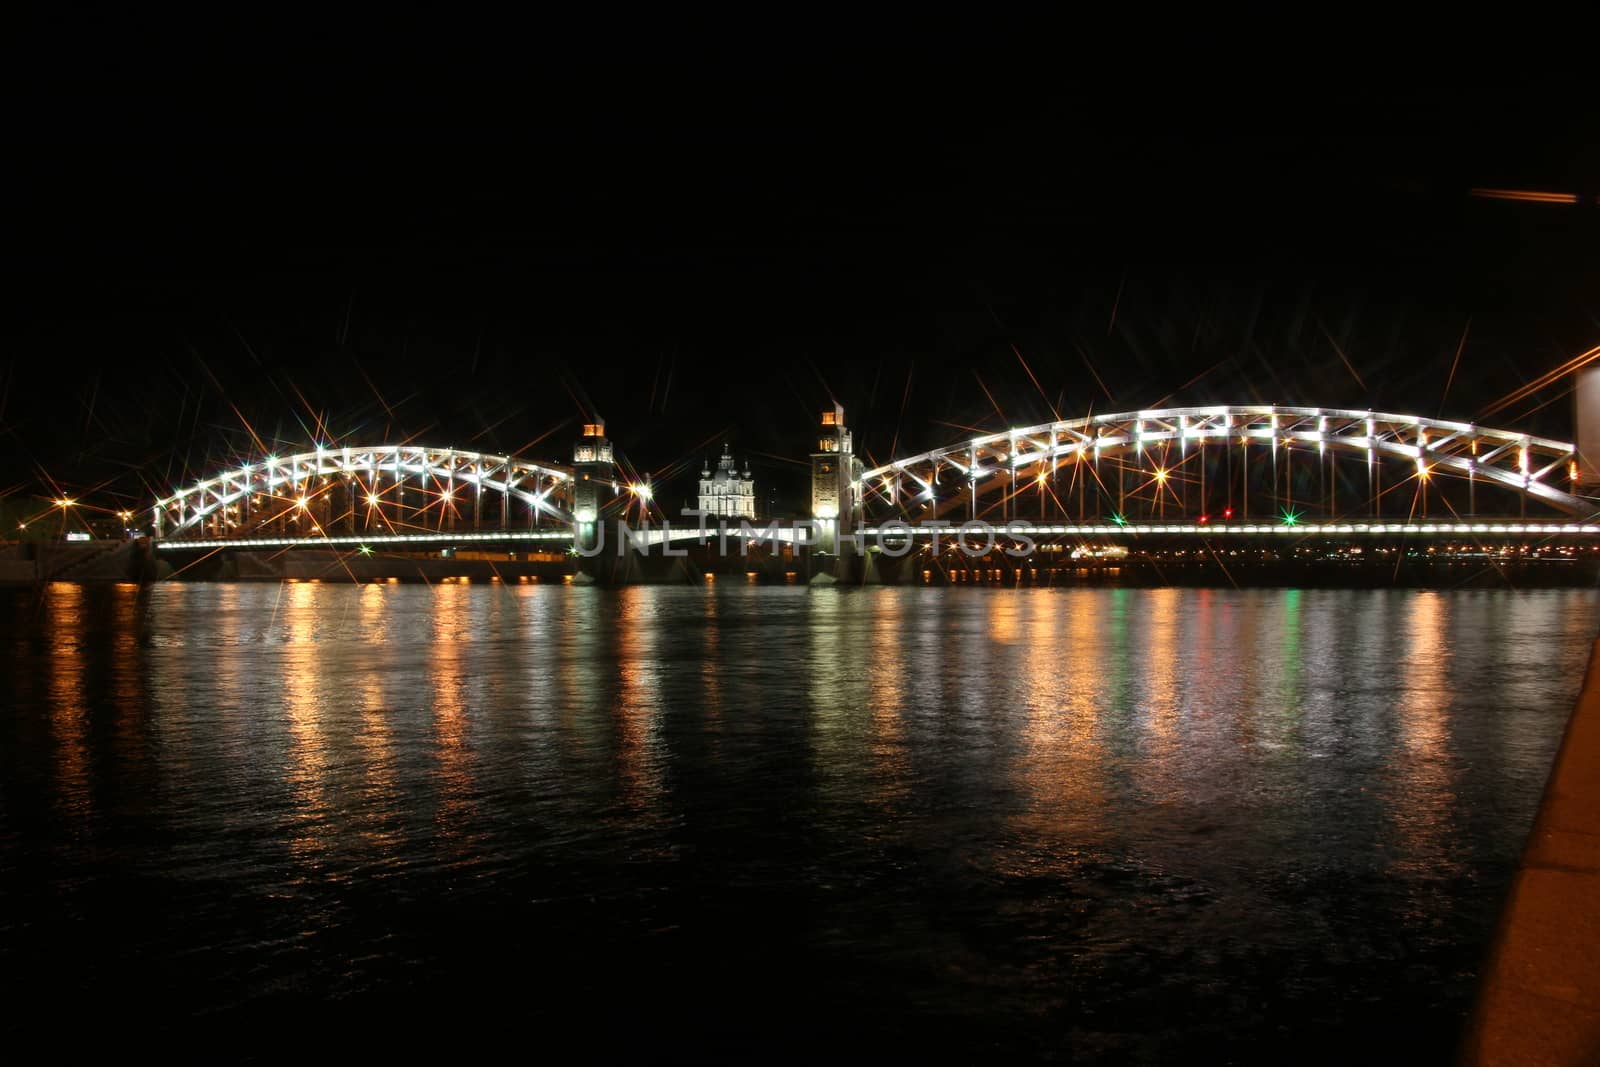 Movable bridge in the night Sankt-
Petersburg